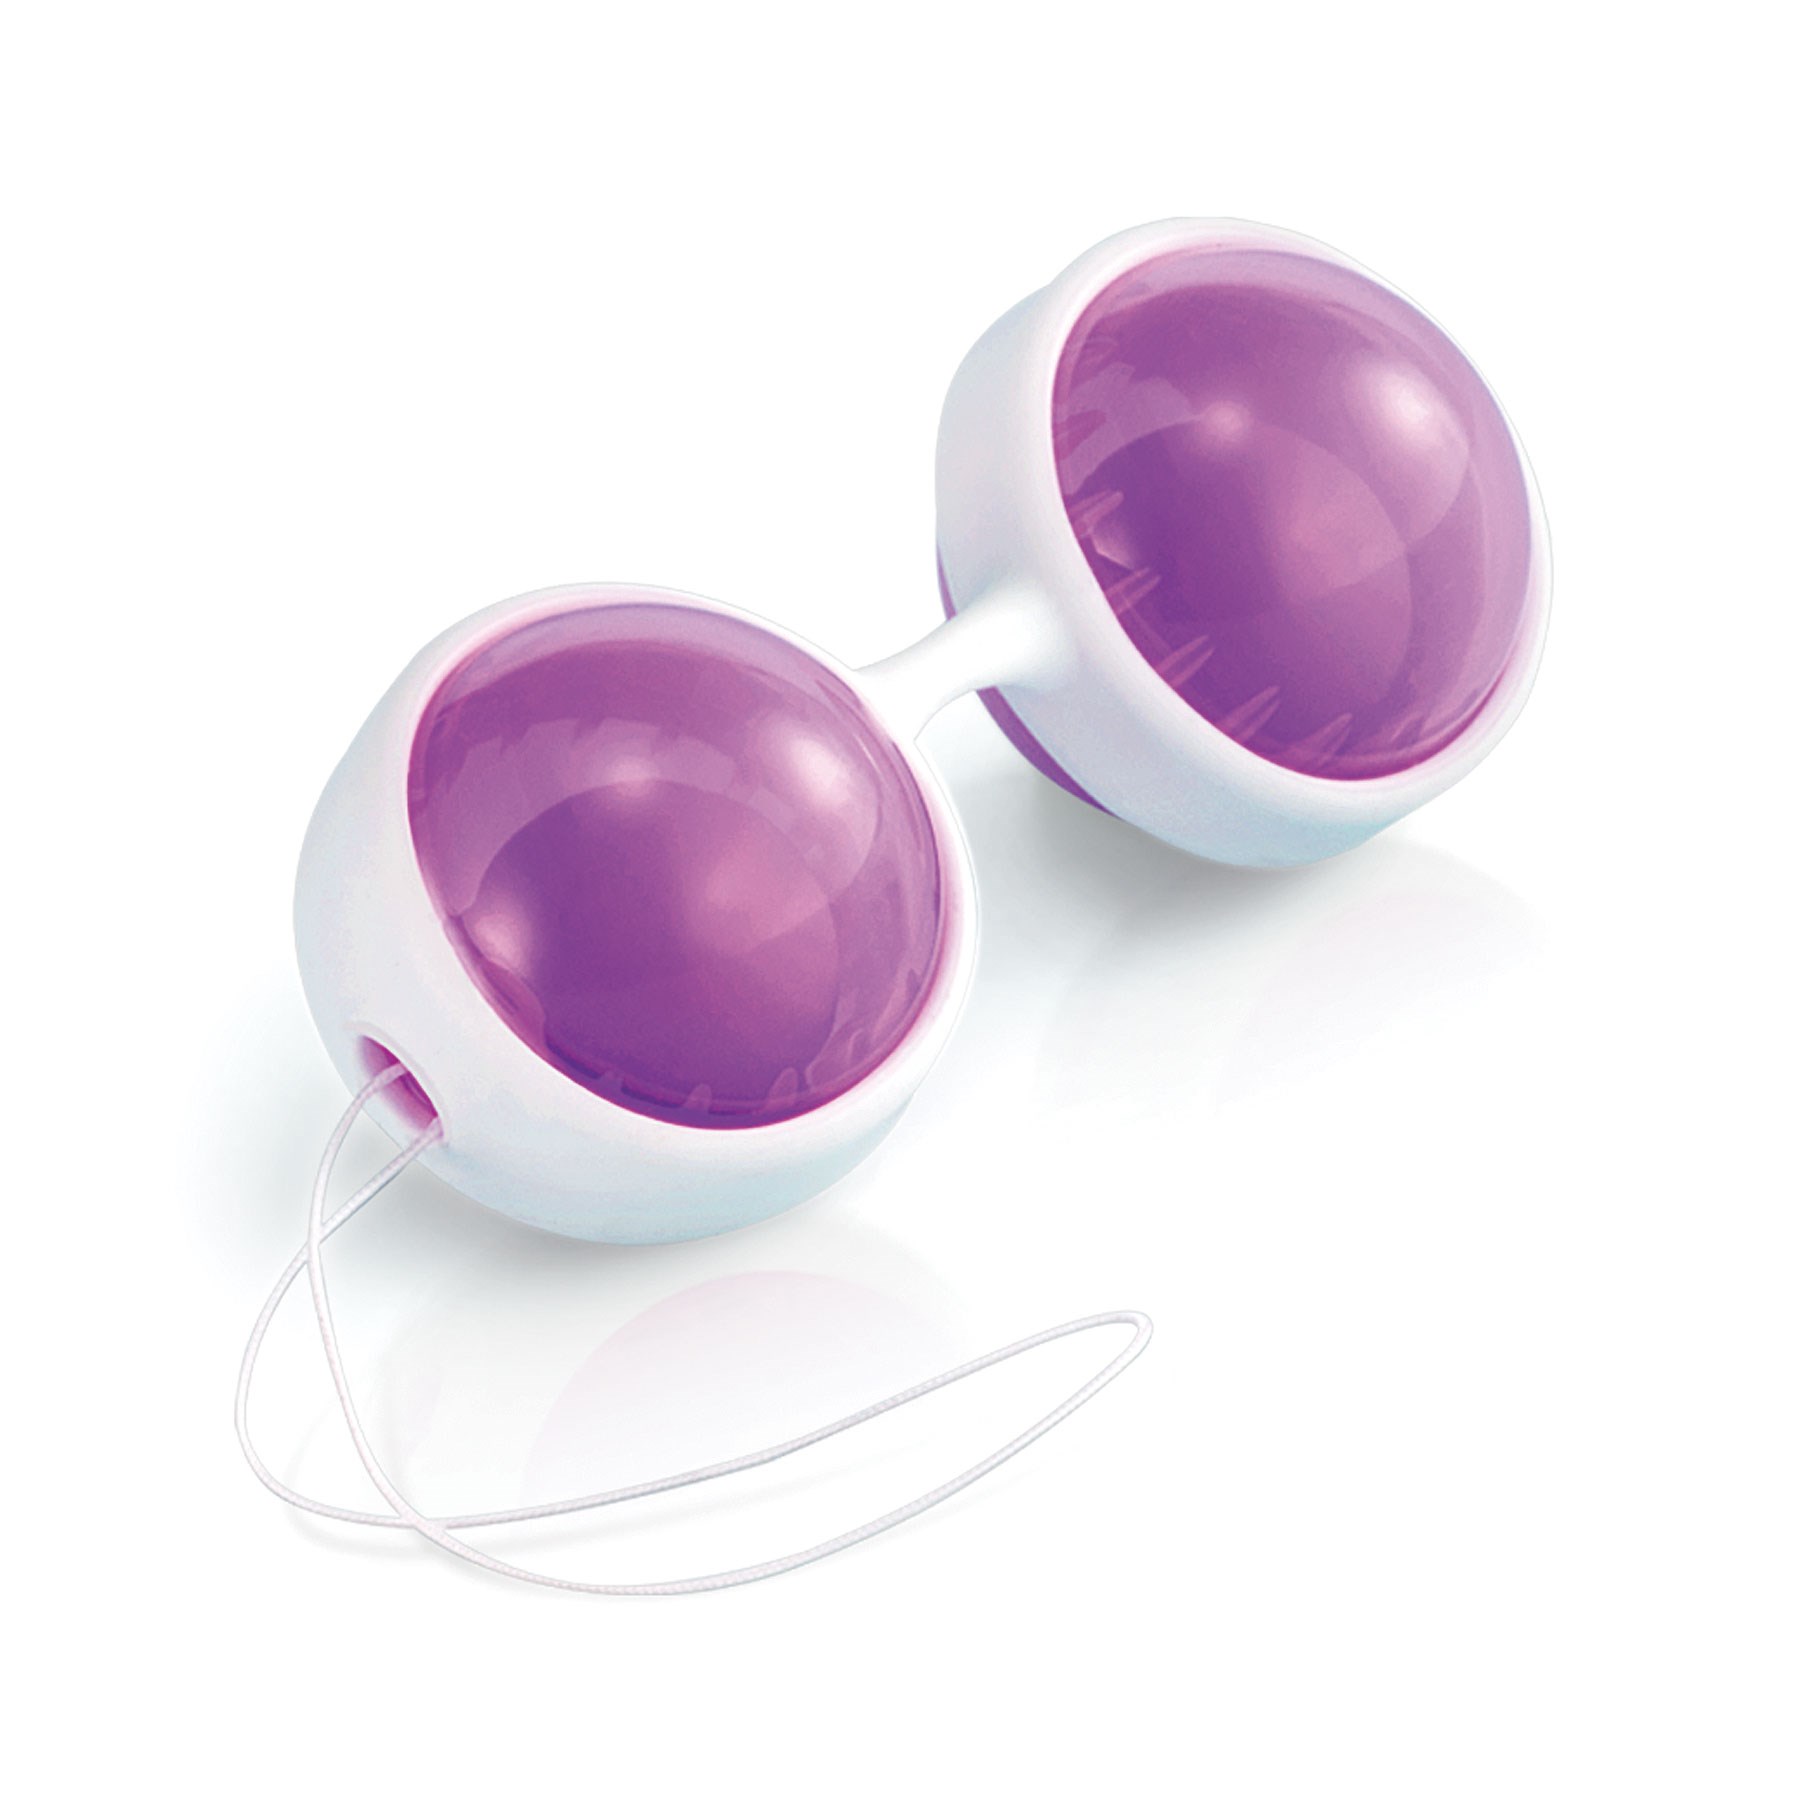 Lelo Luna Beads Plus with purple weights